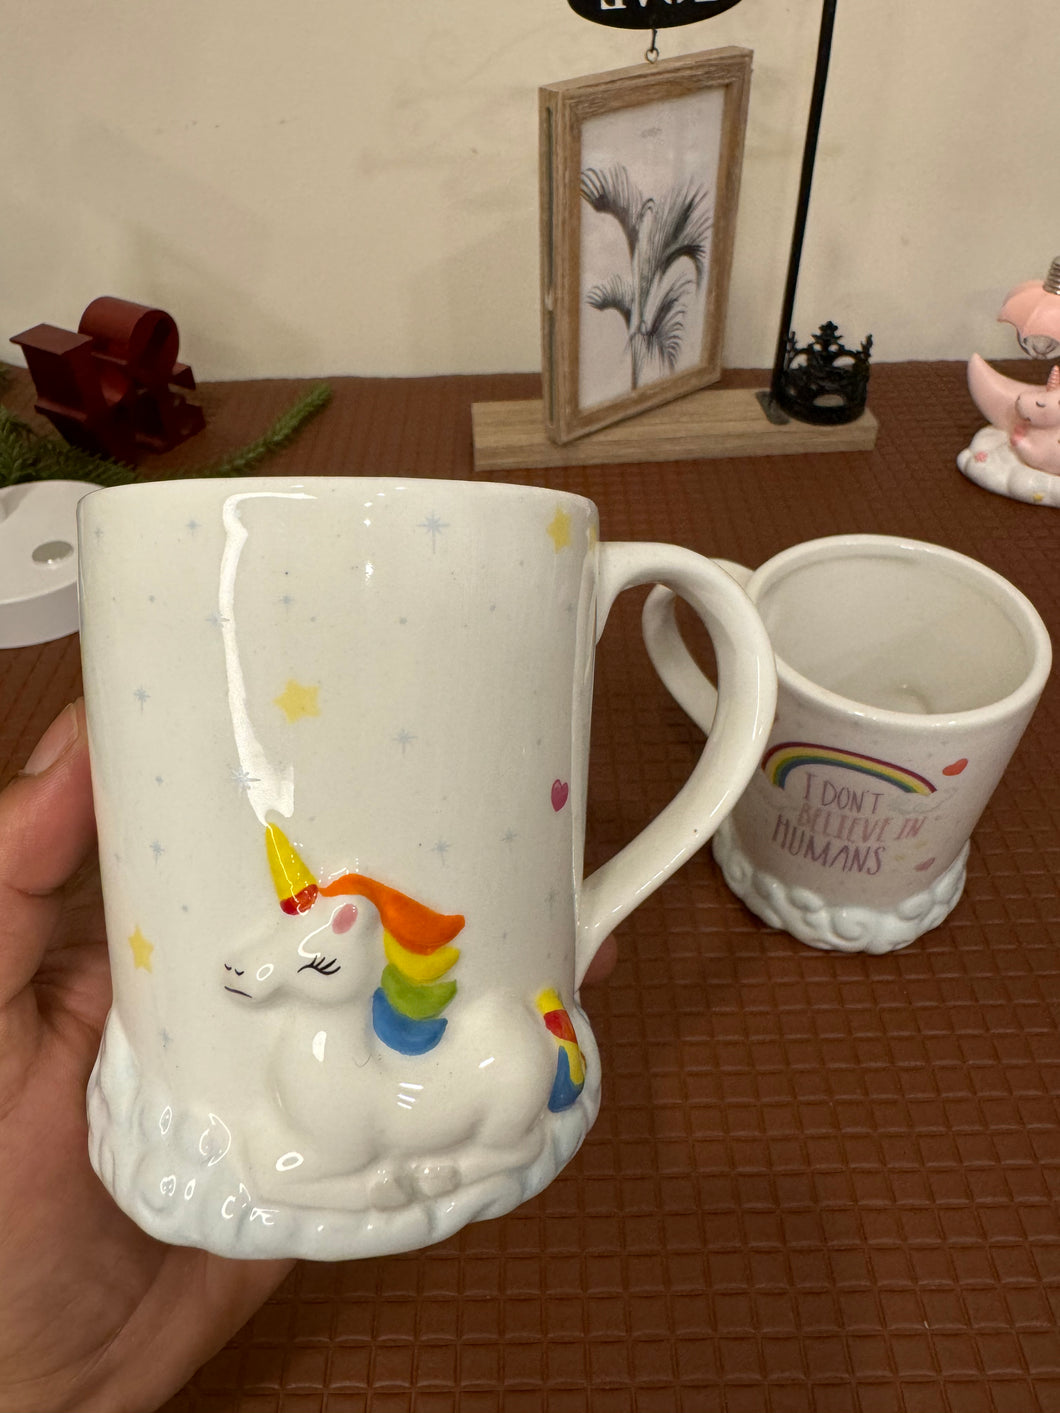 Unicorn Rainbow Mug